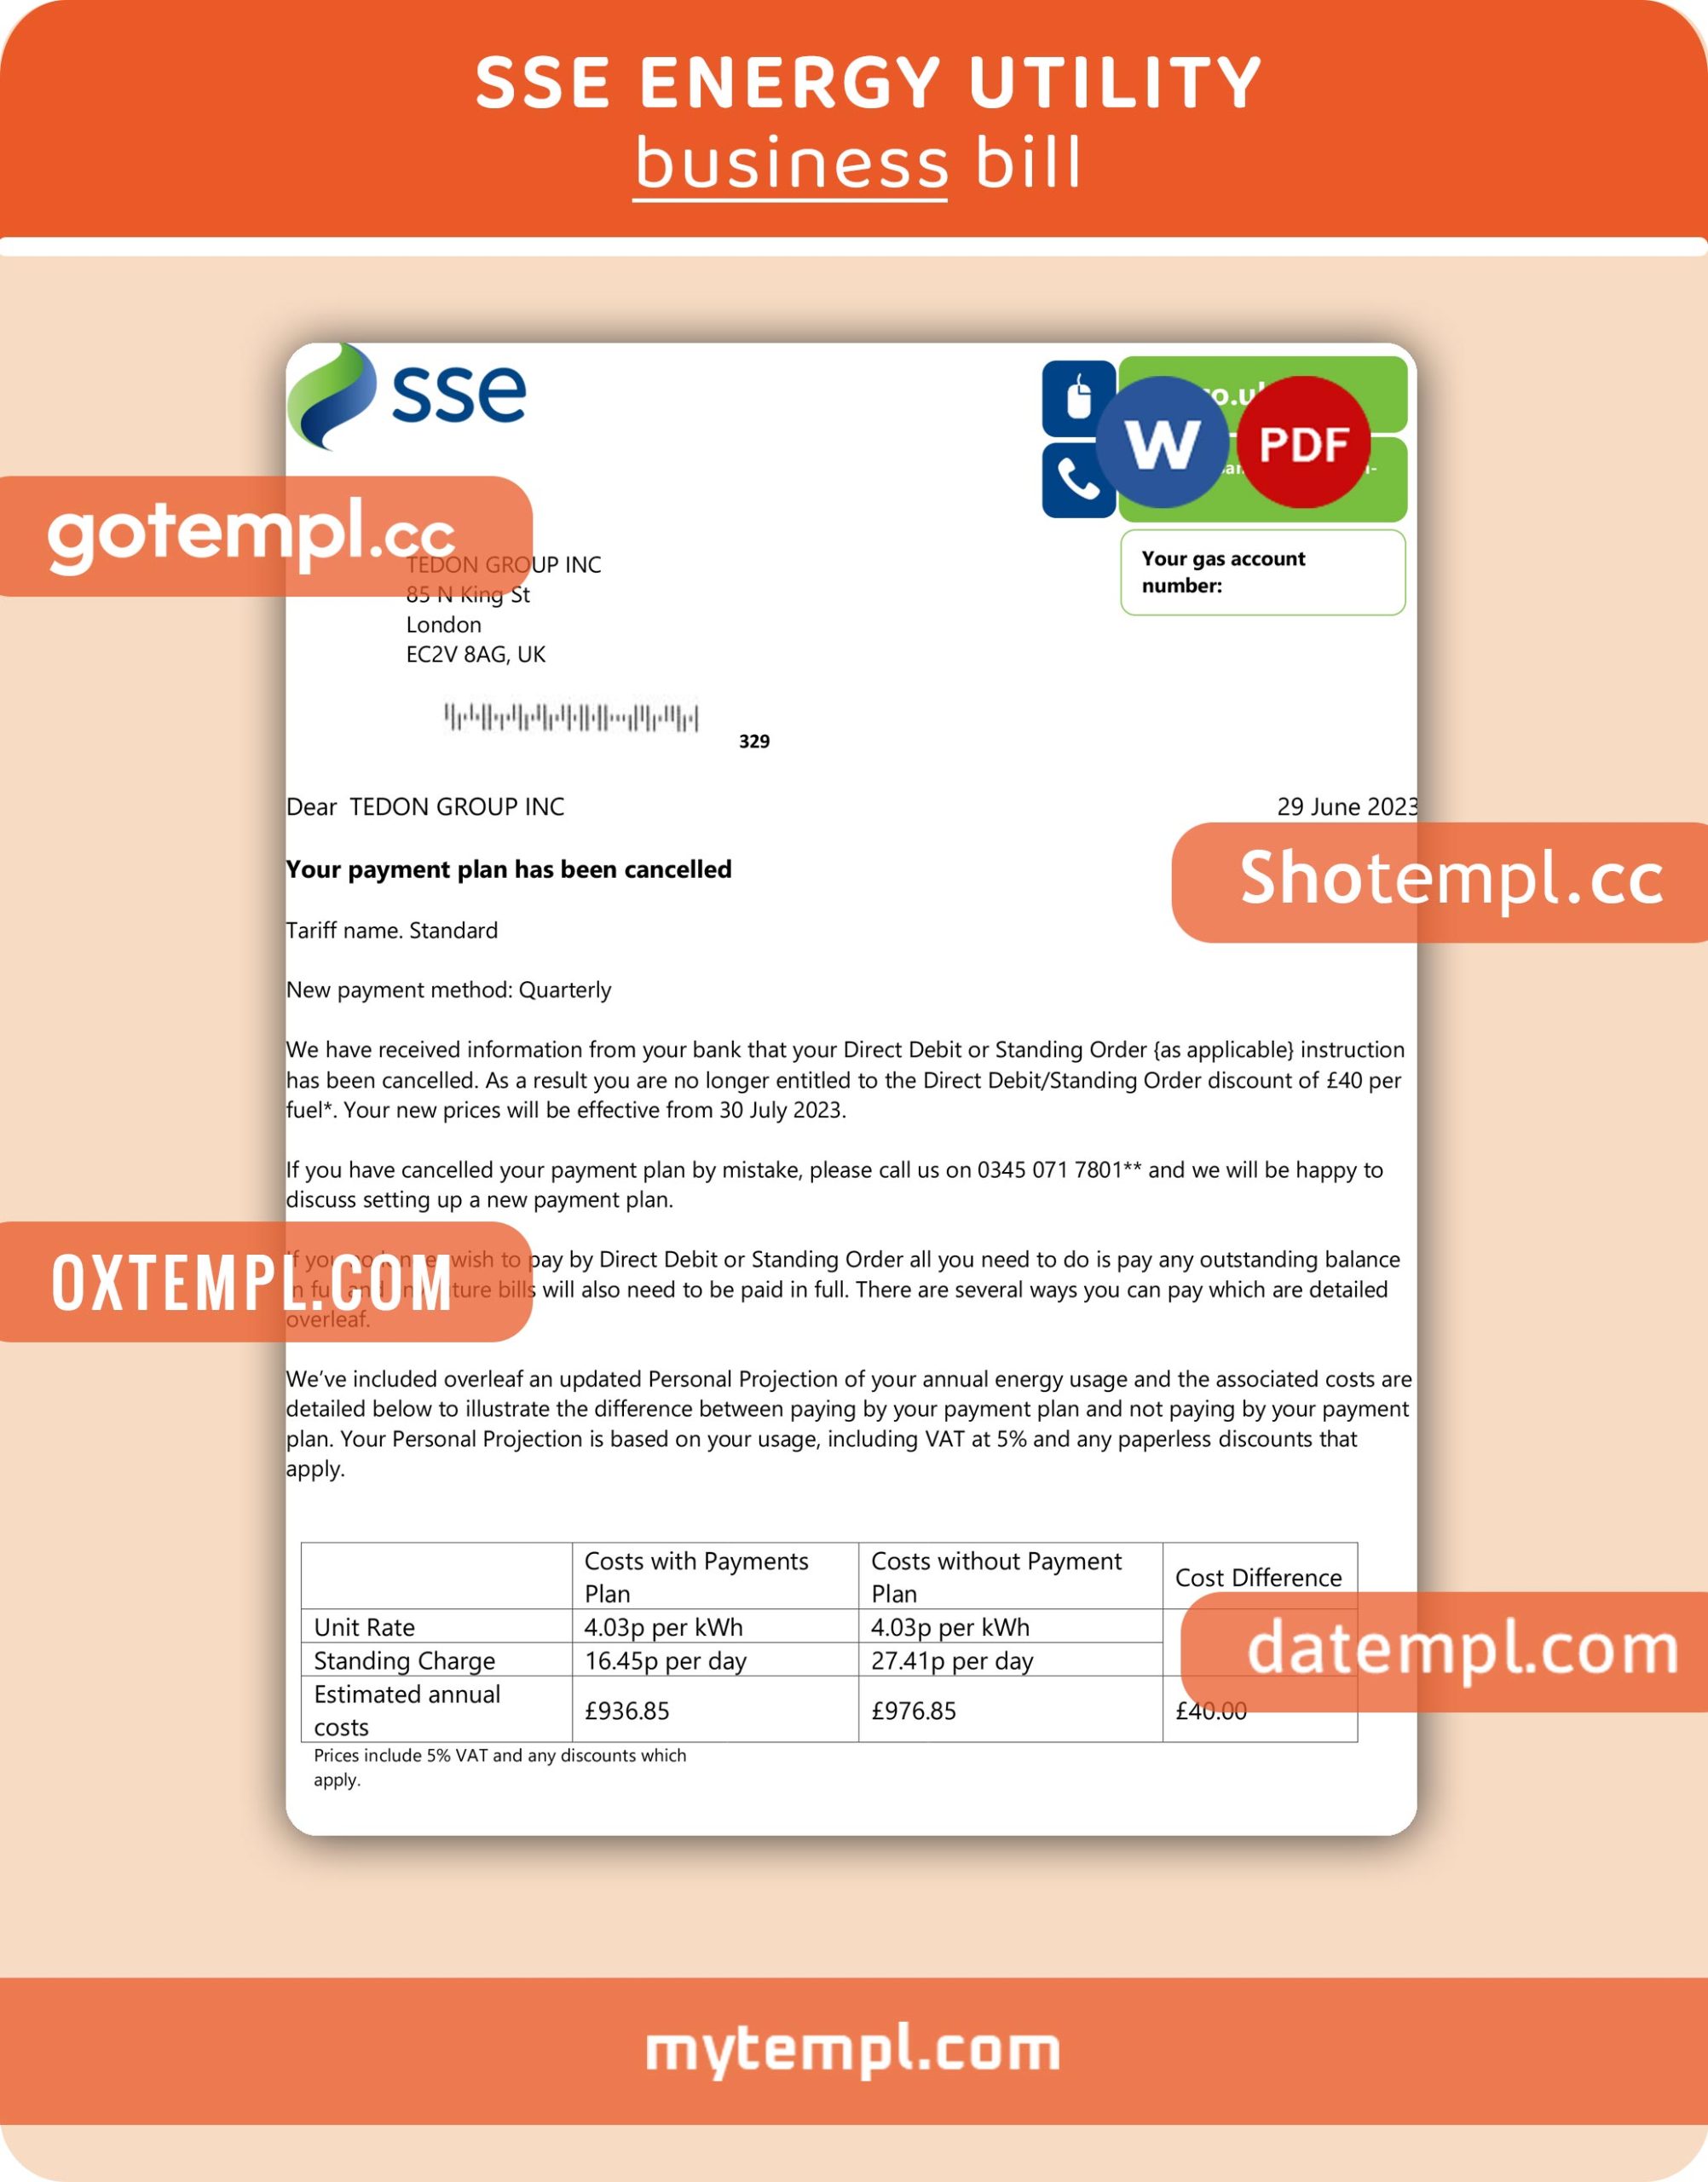 Denmark birth certificate PSD template, completely editable